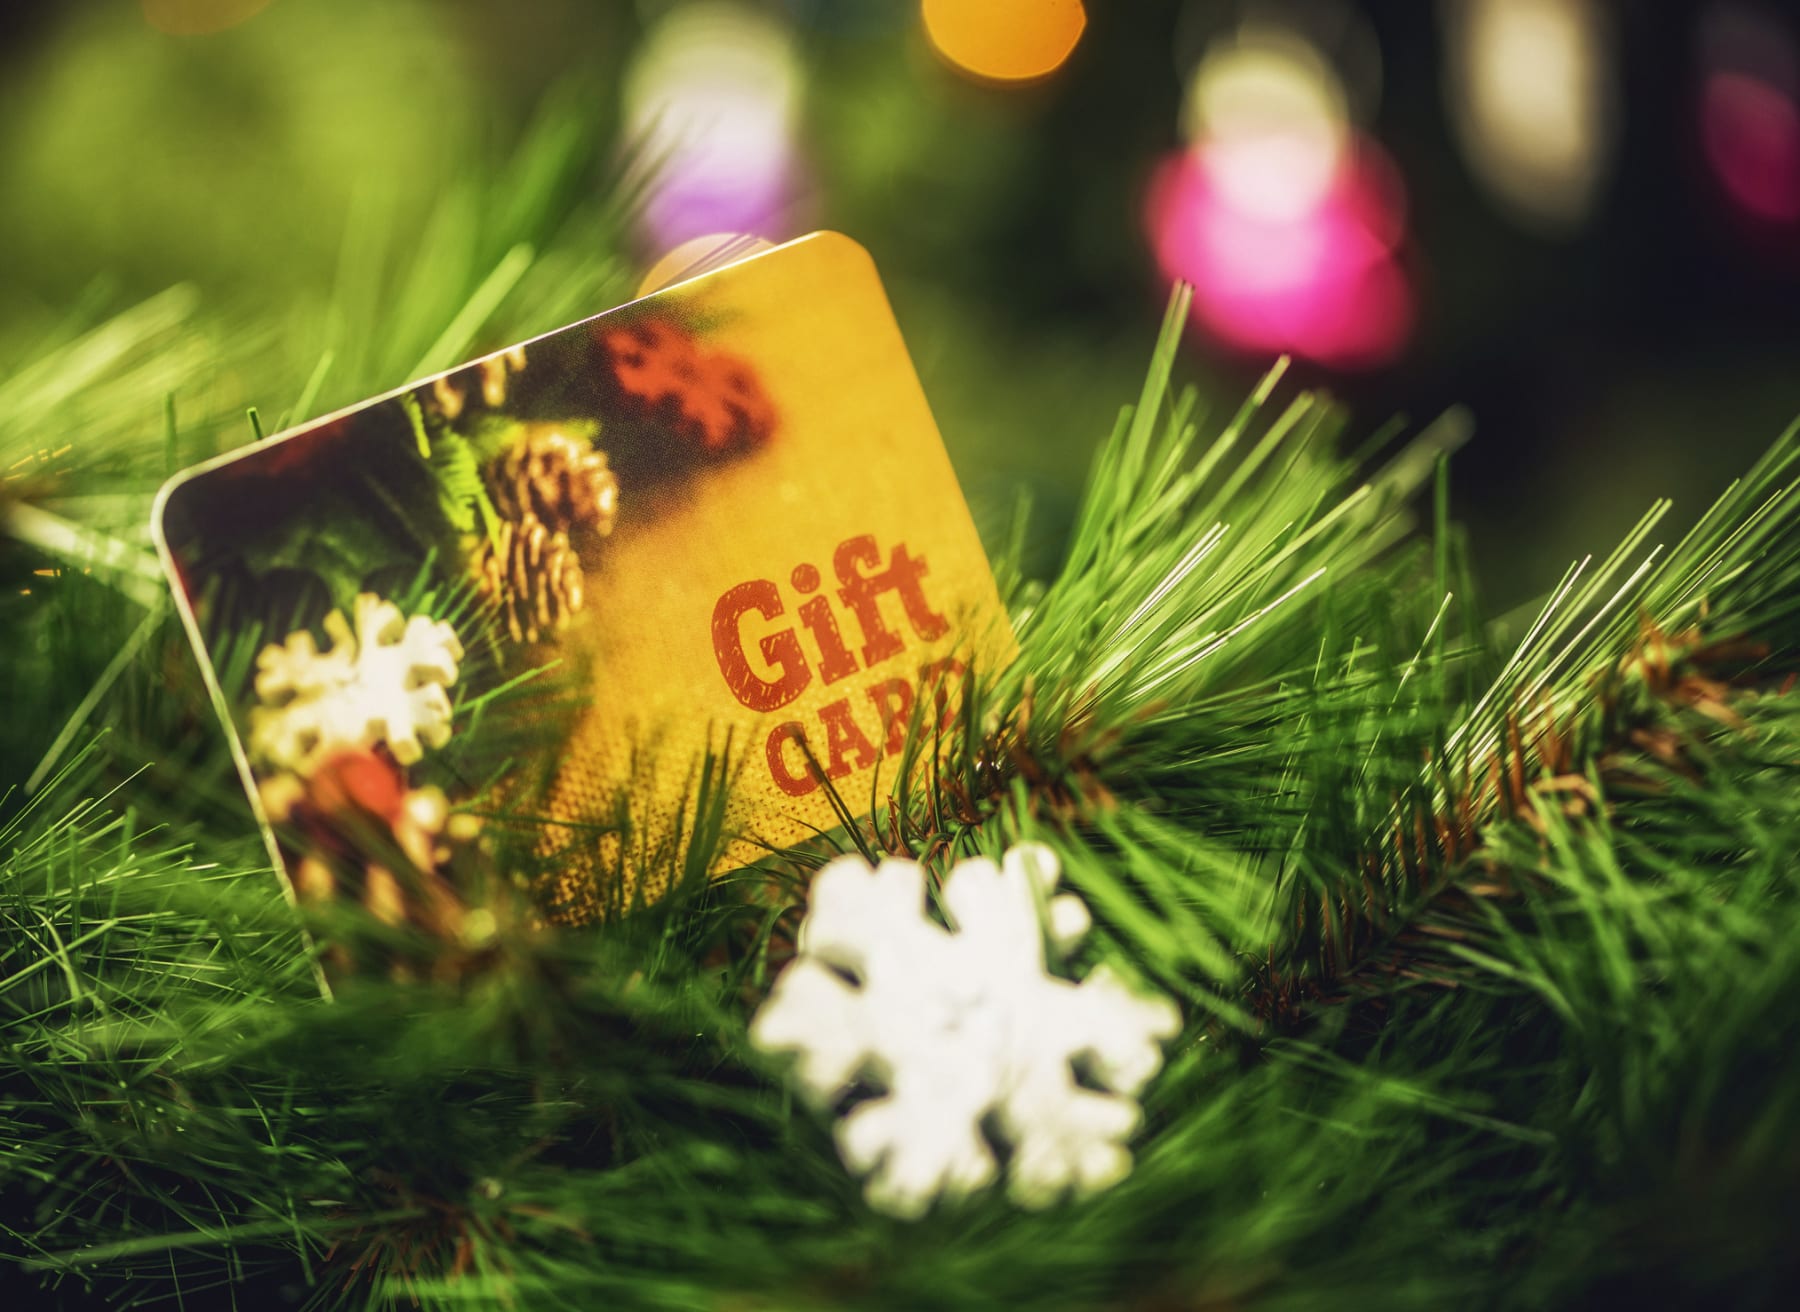 Gift card sits on Christmas tree.